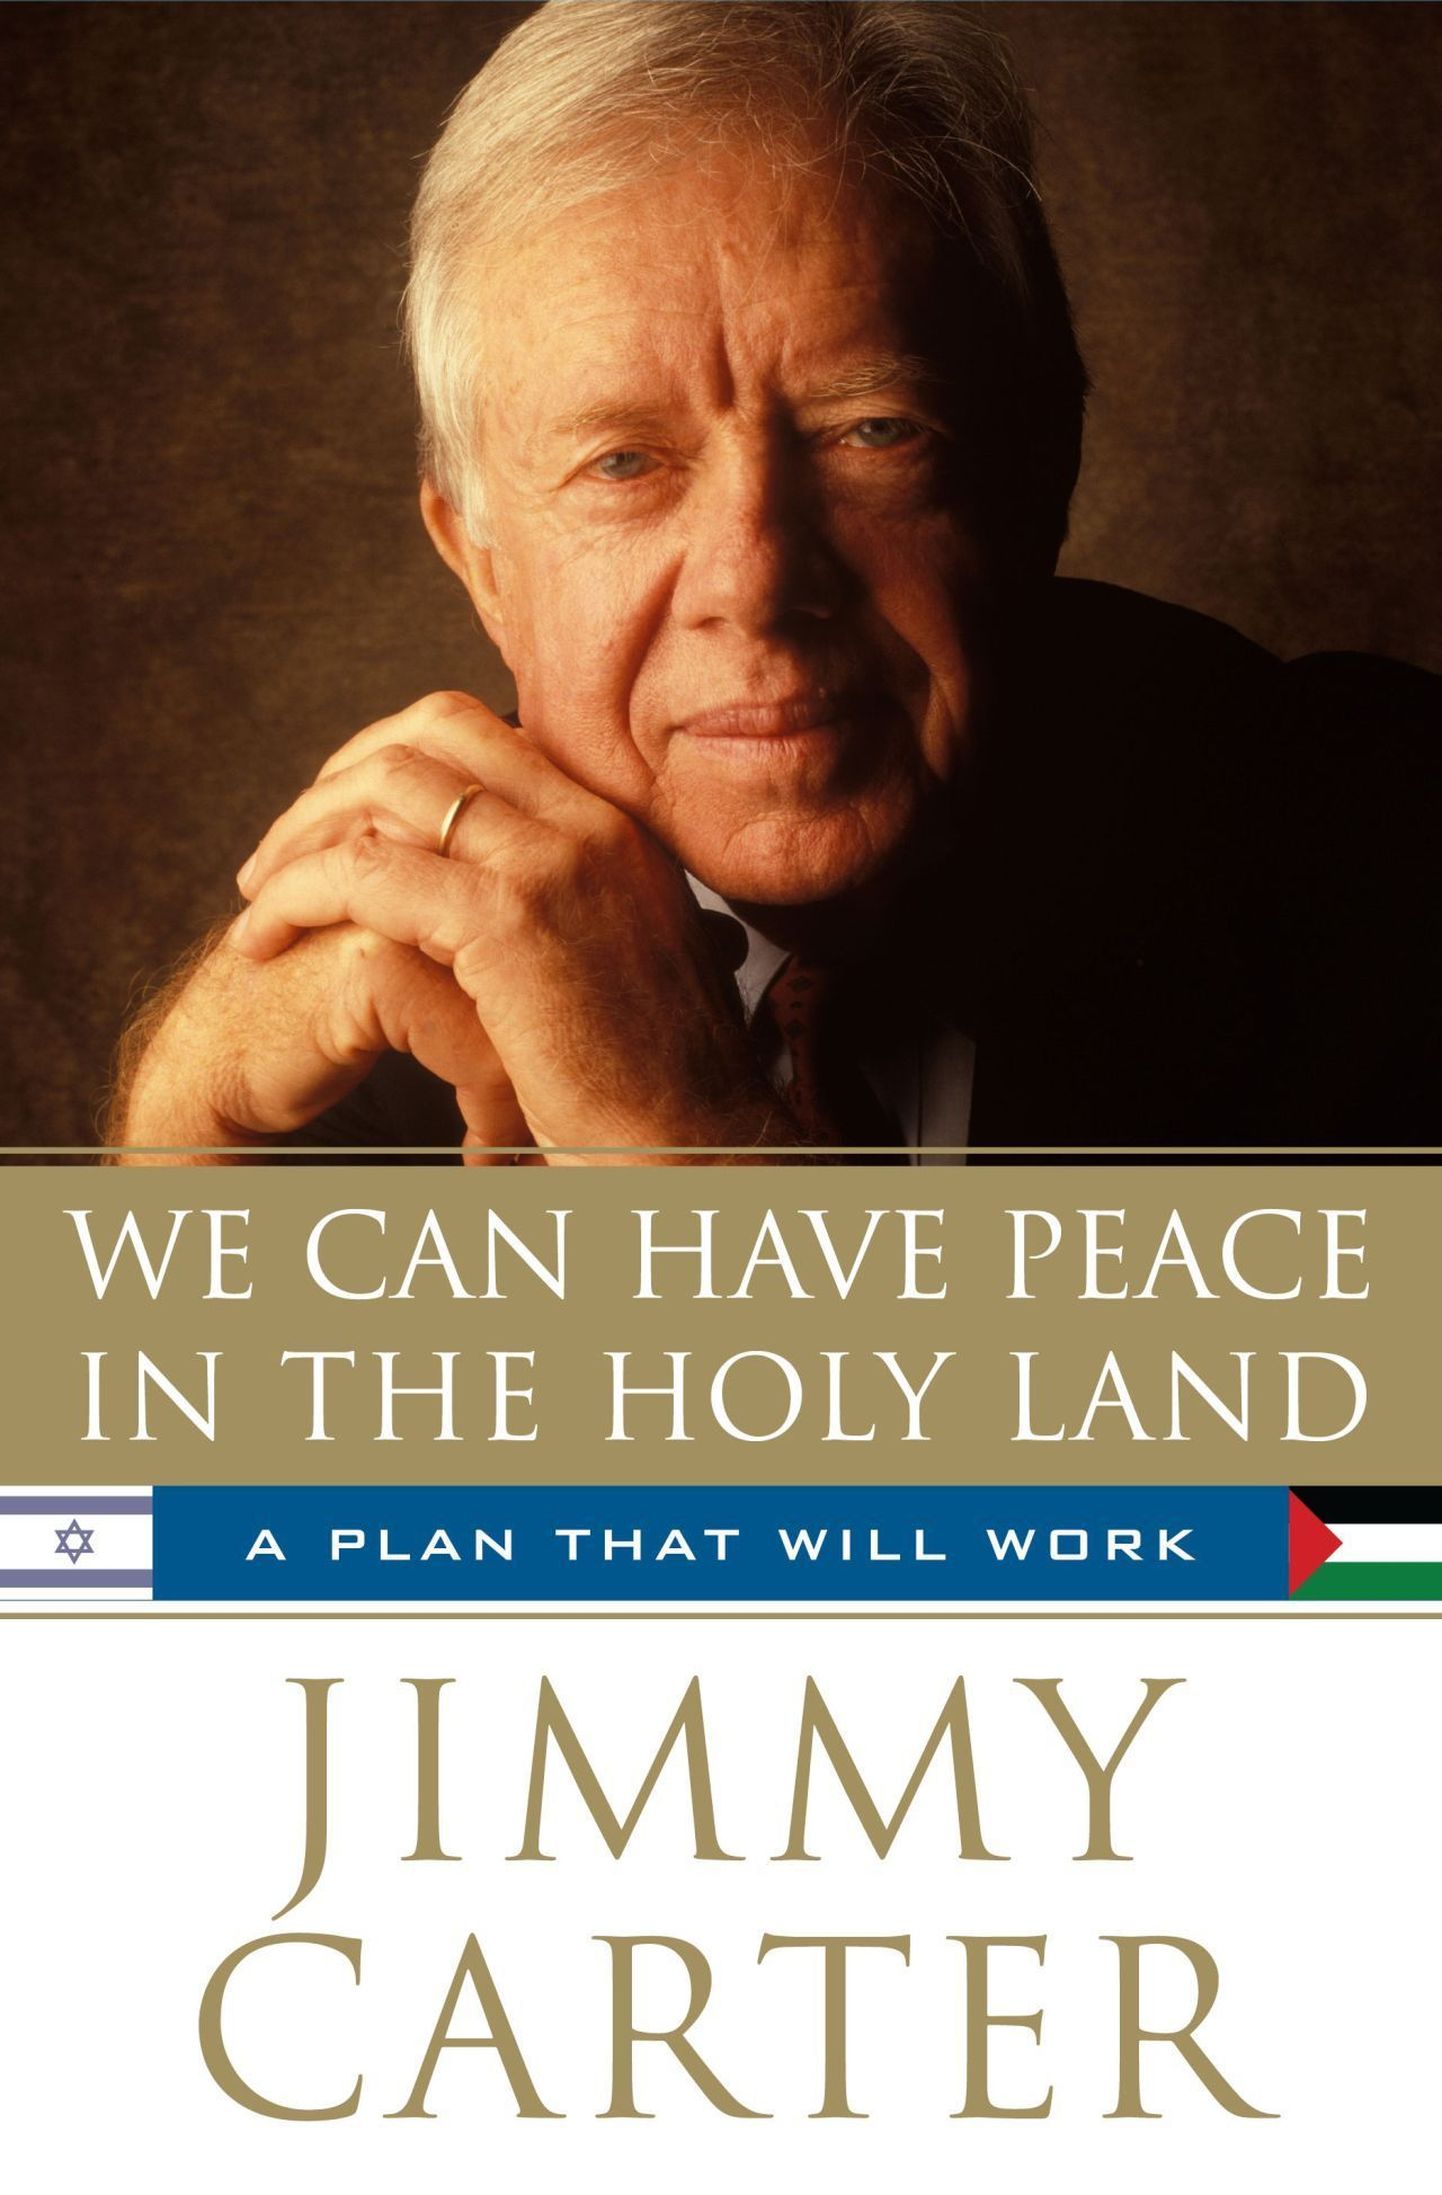 Jimmy Carteri uus raamat.